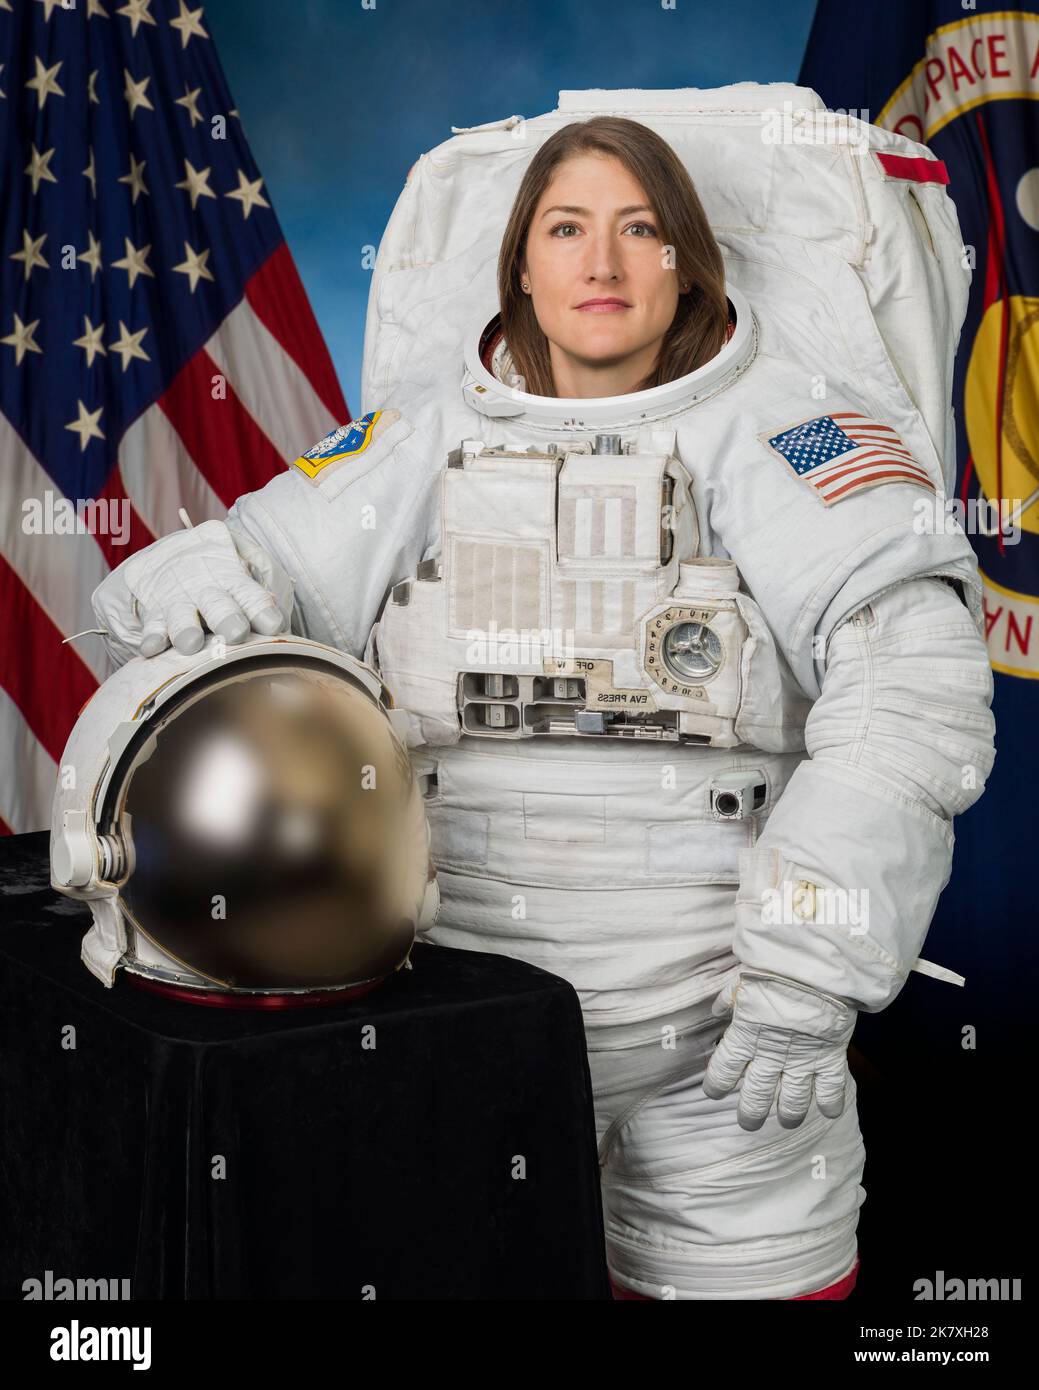 Astronaut Christina Koch Official EMU Portrait. Official portrait of NASA astronaut Christina Koch. Stock Photo